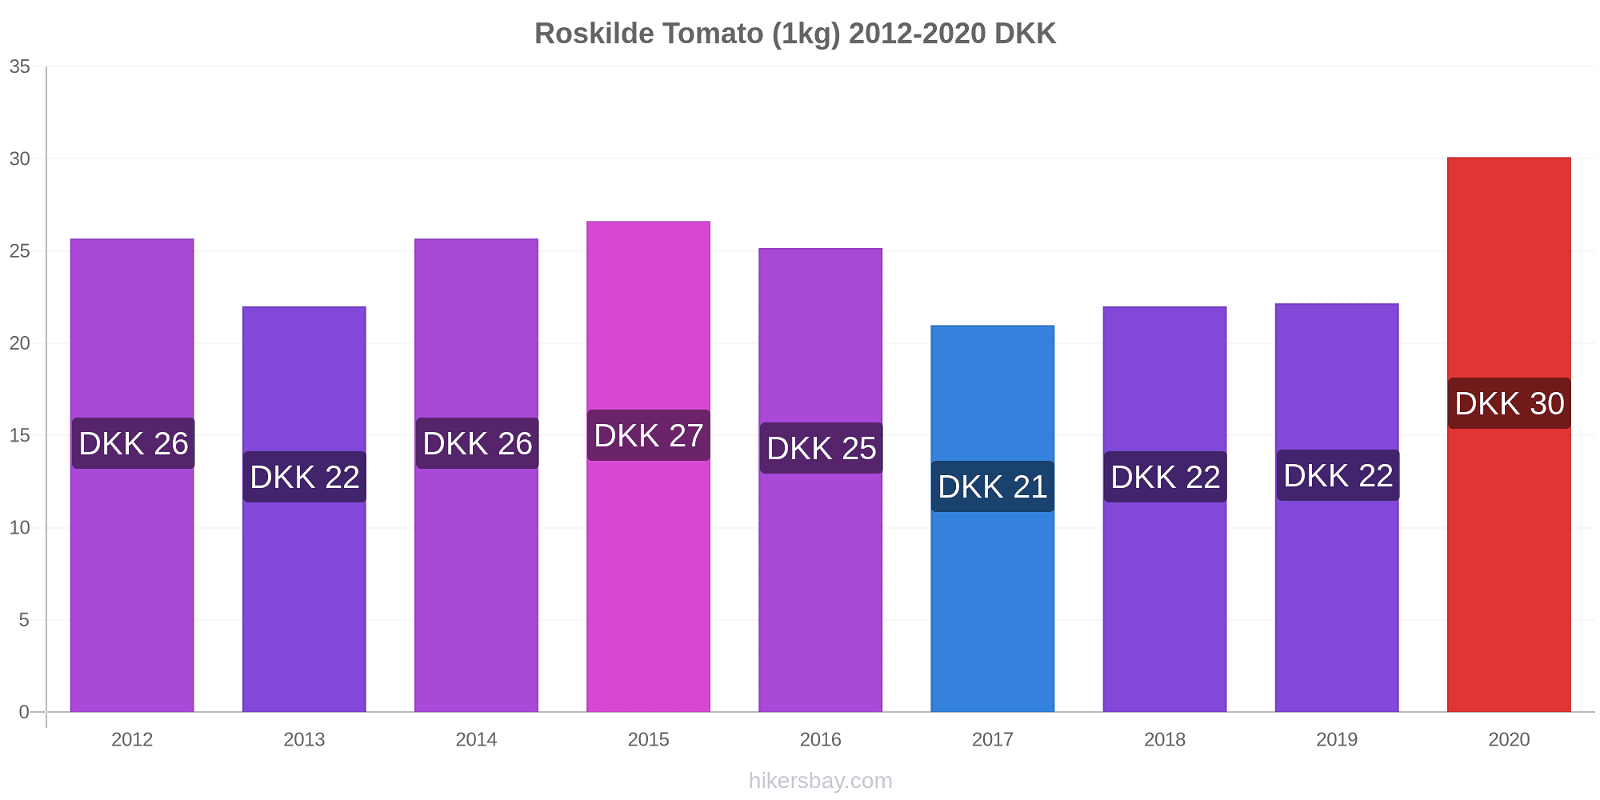 Roskilde price changes Tomato (1kg) hikersbay.com